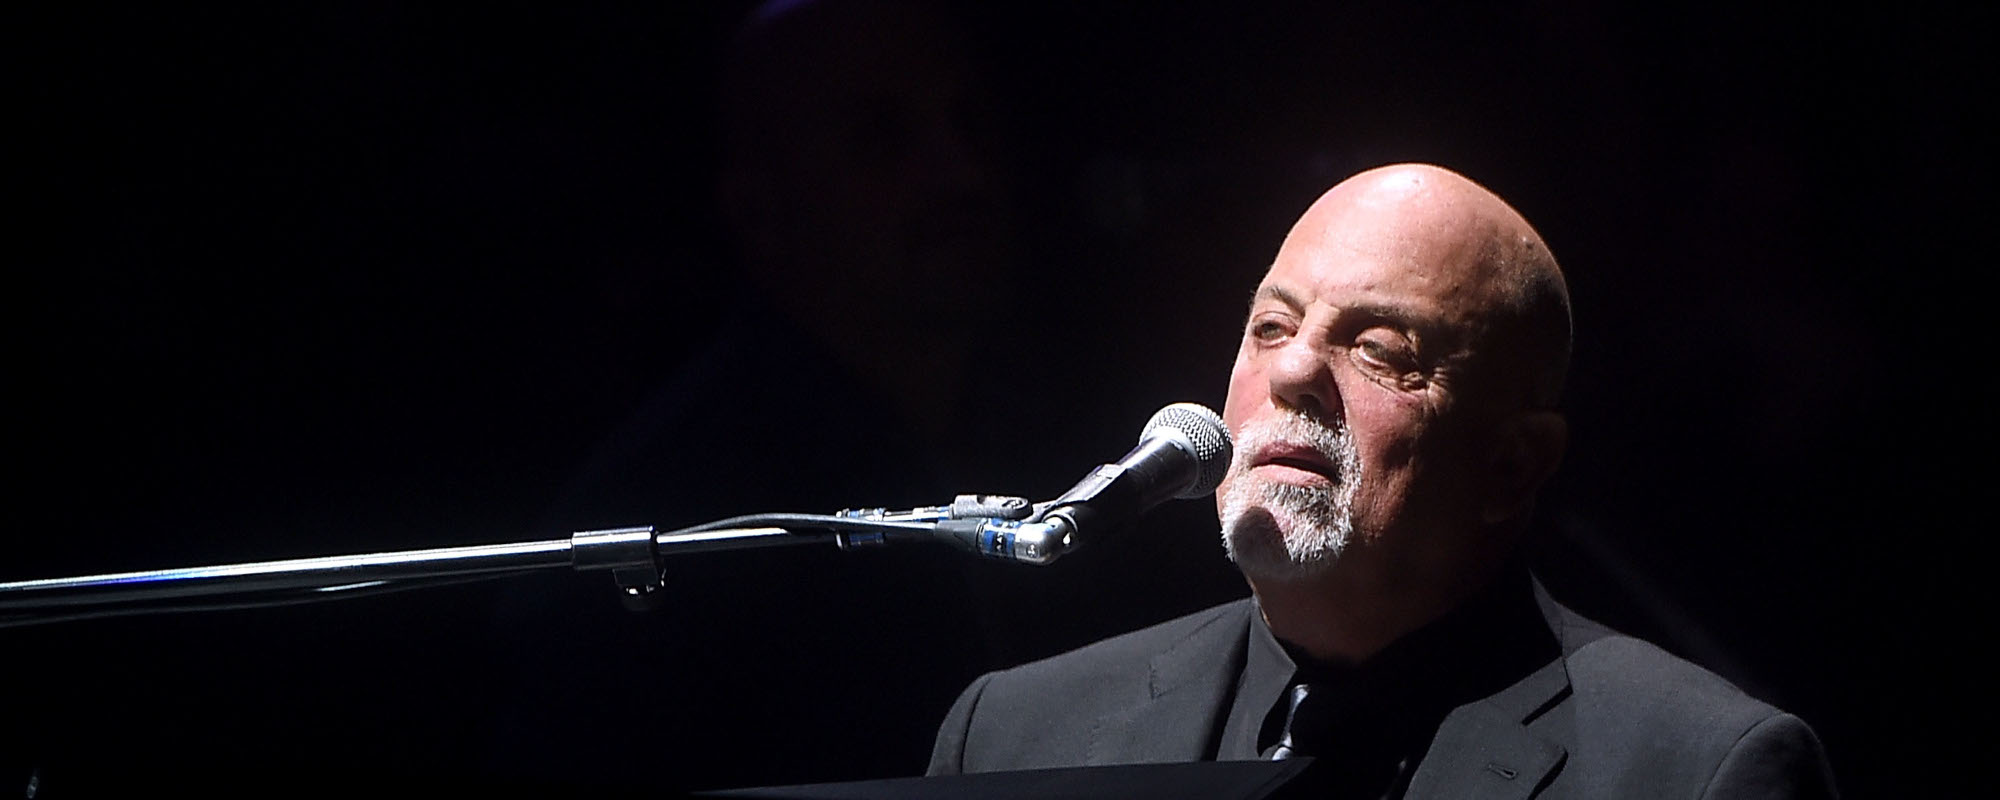 Billy Joel Shares Update on Post-MSG Residency Plans: “I’m Not Leaving [Touring]”